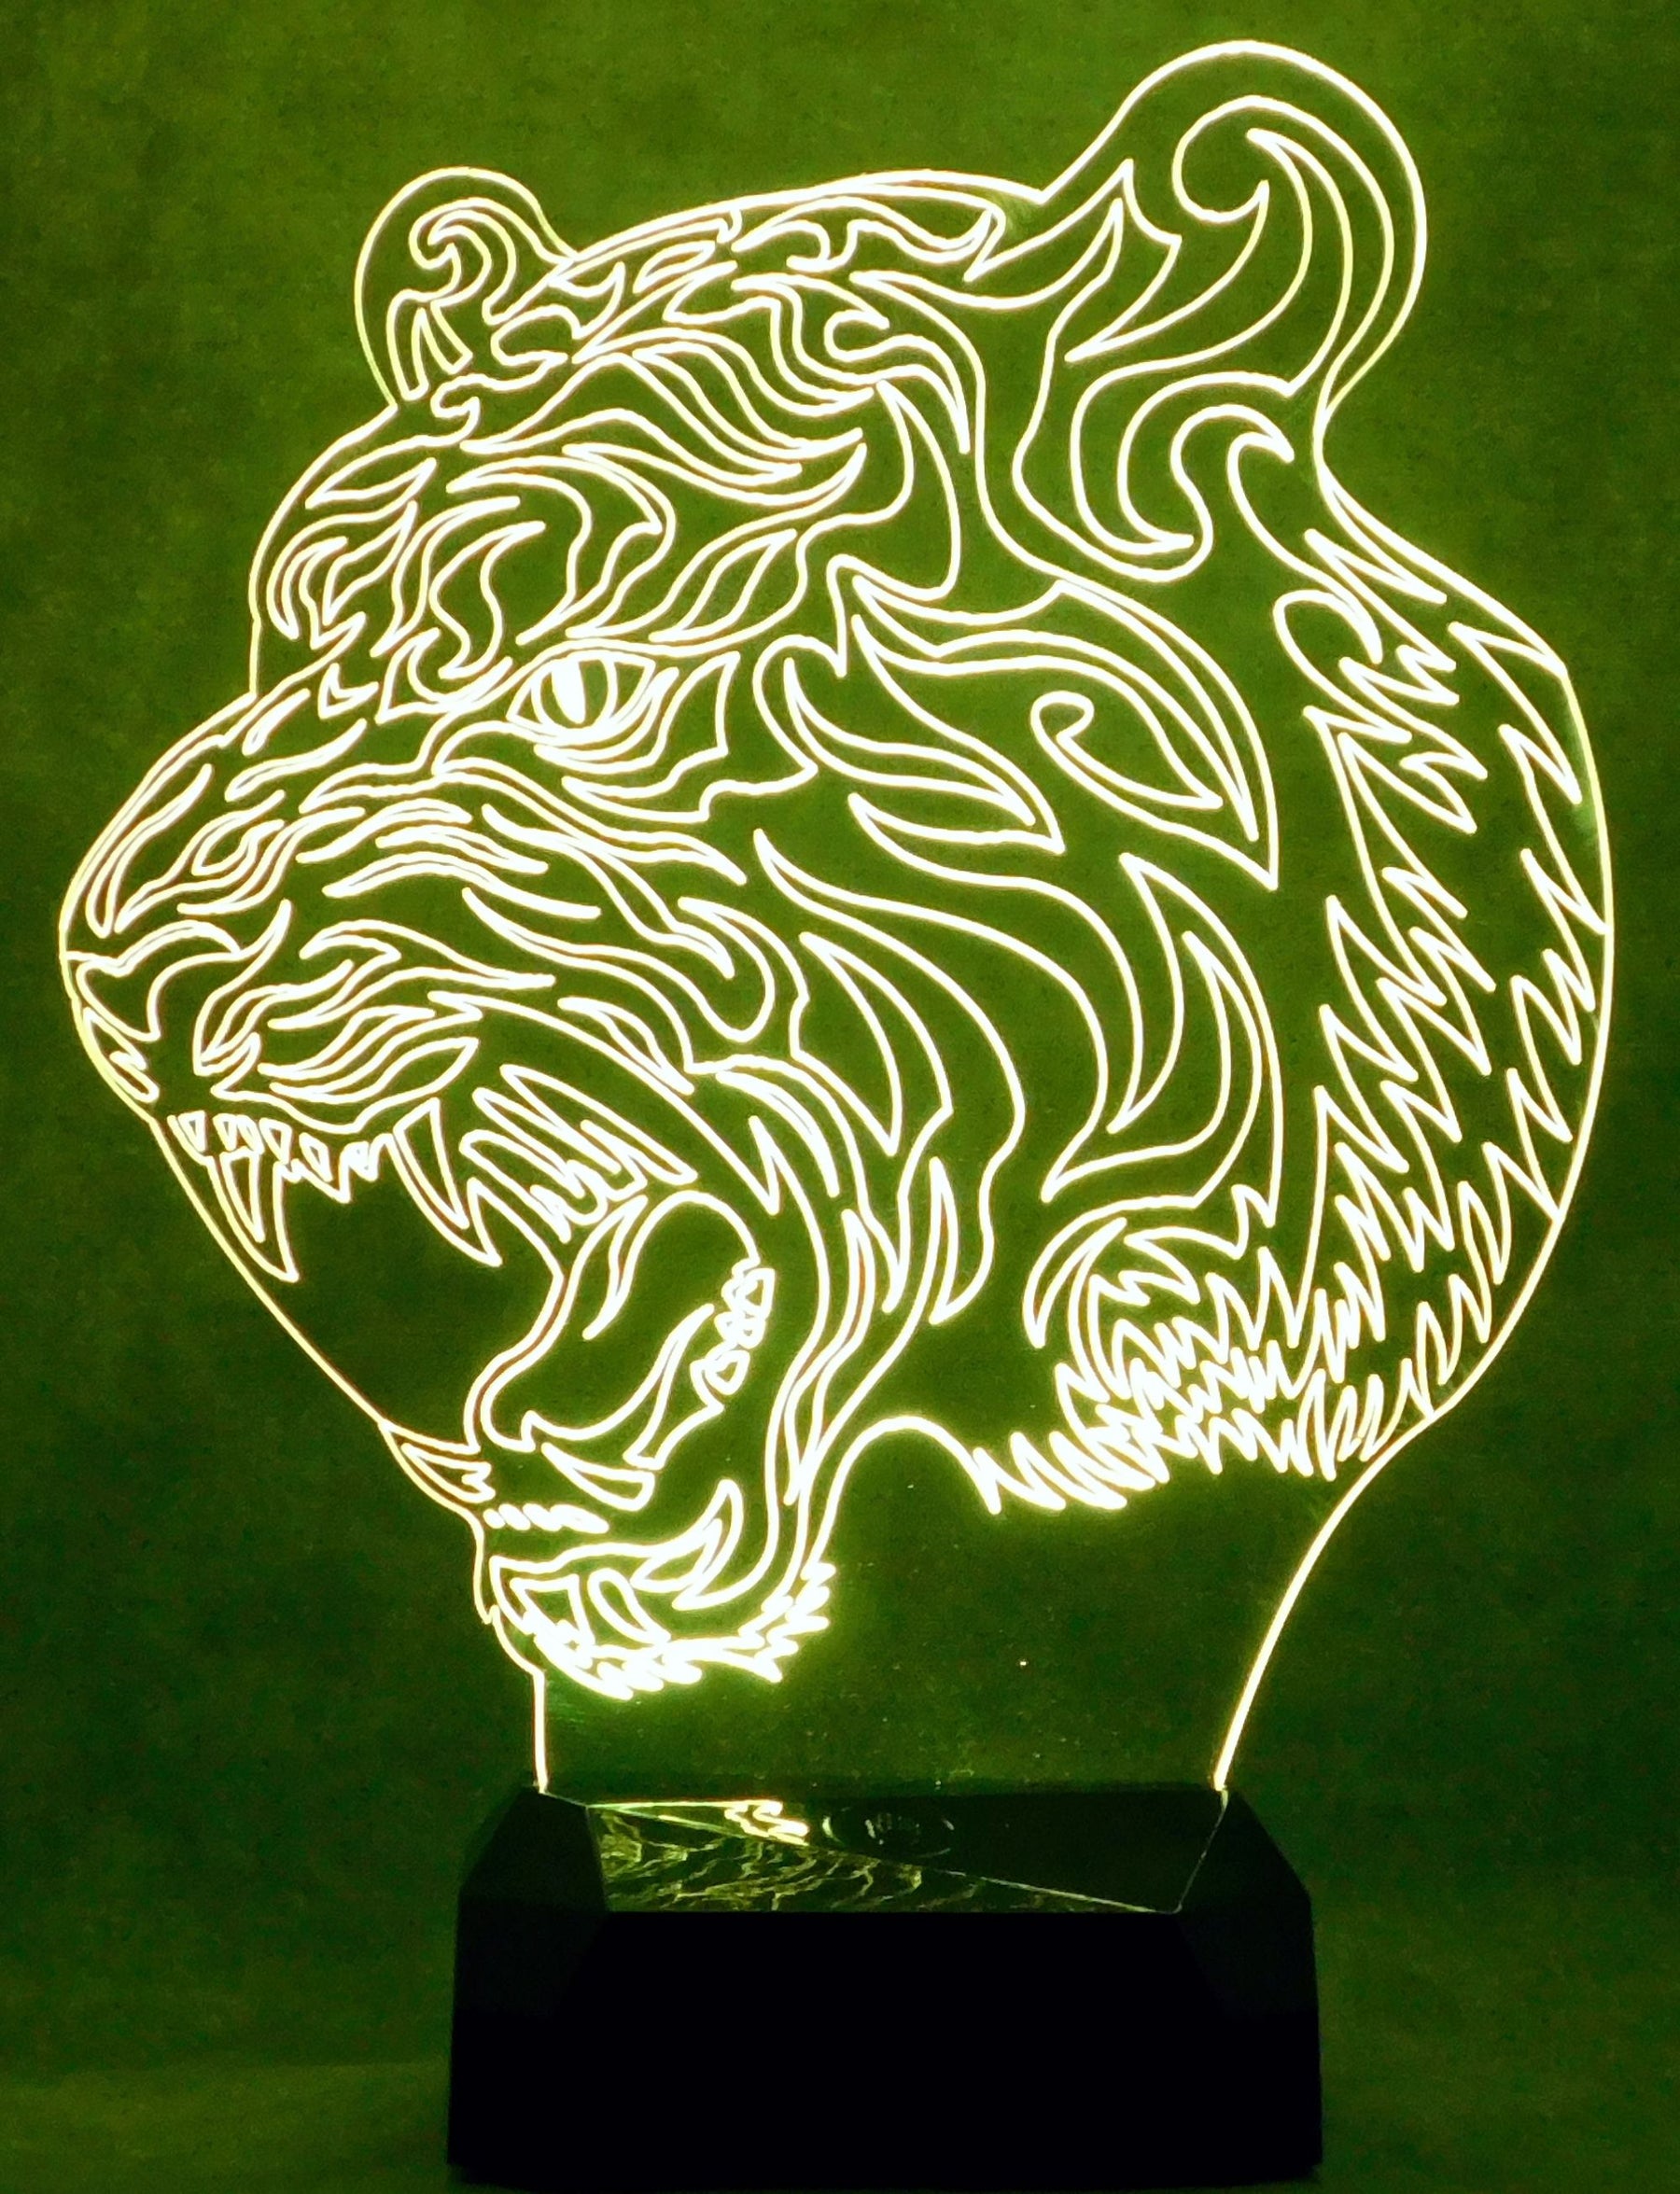 Tiger's Head Image 3-D Optical Illusion Multicolored Lamp